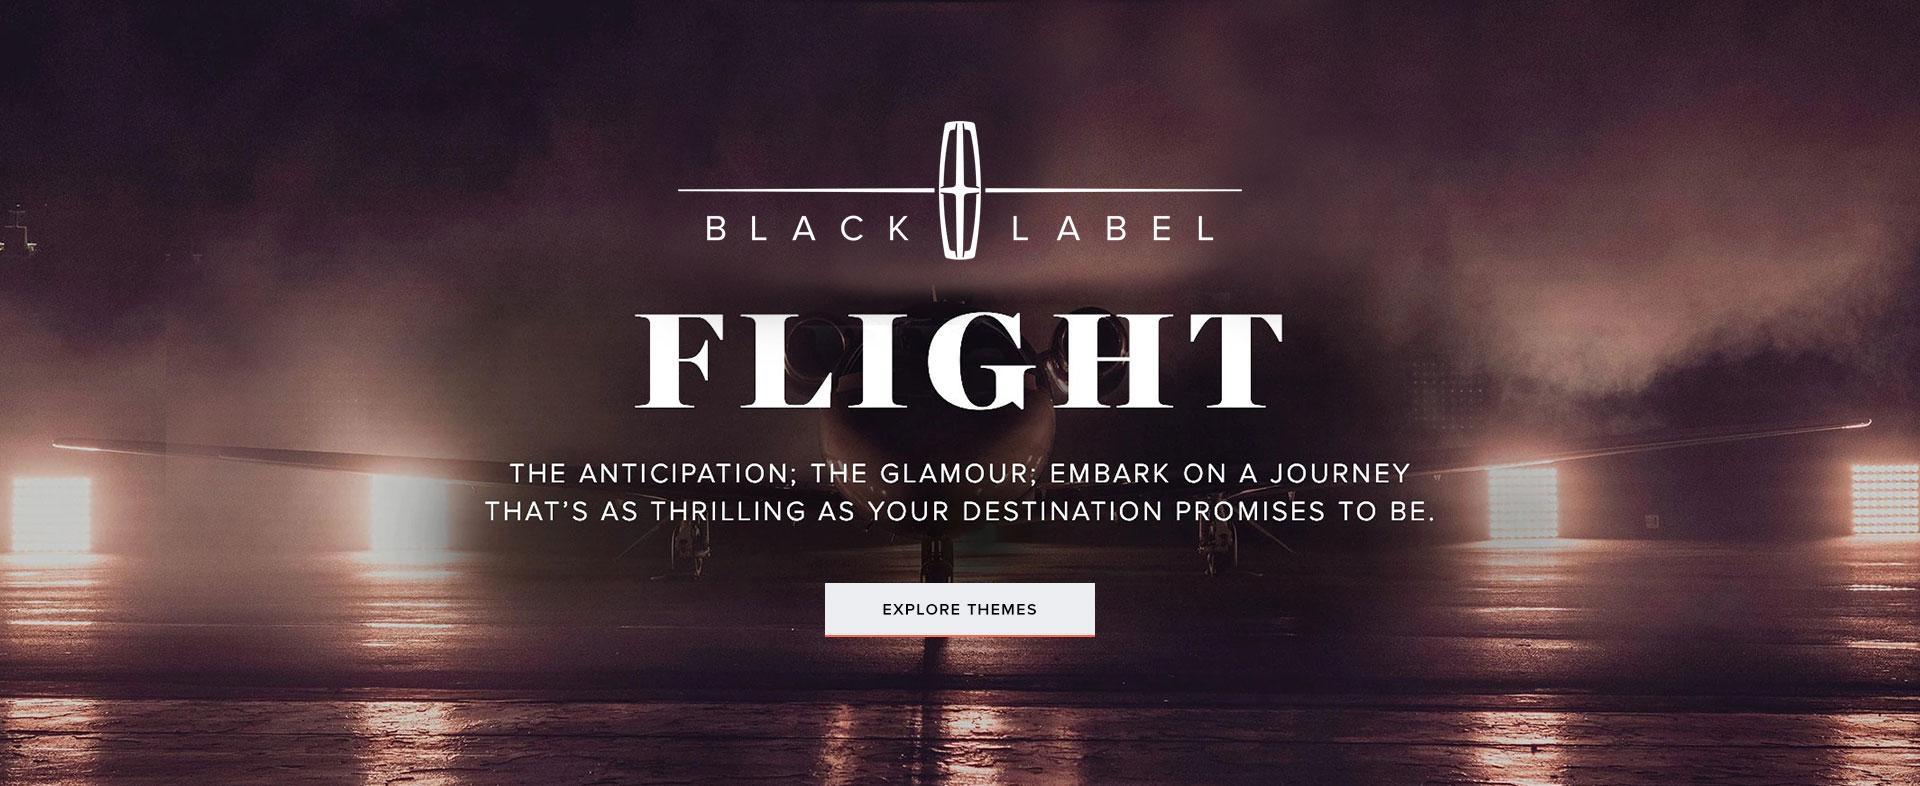 Lincoln Black Label Flight | South Bay Lincoln